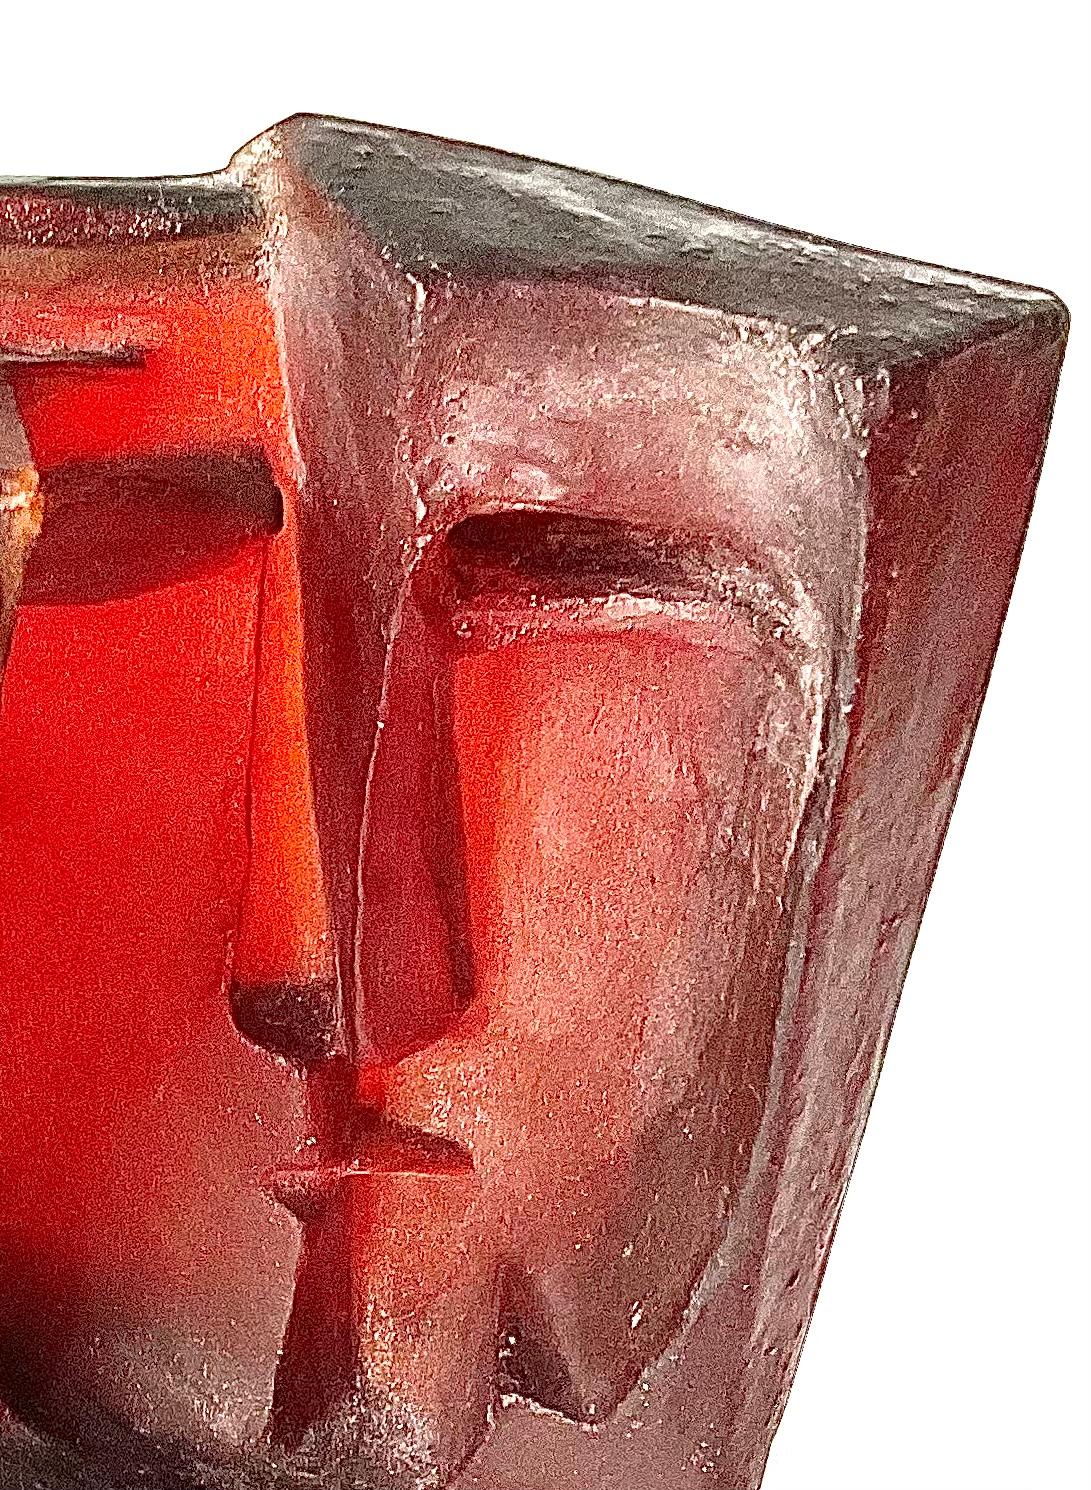 Kiss Abstract Glass Sculpture by Stanislav Libensky Brychtova Jaroslava 2